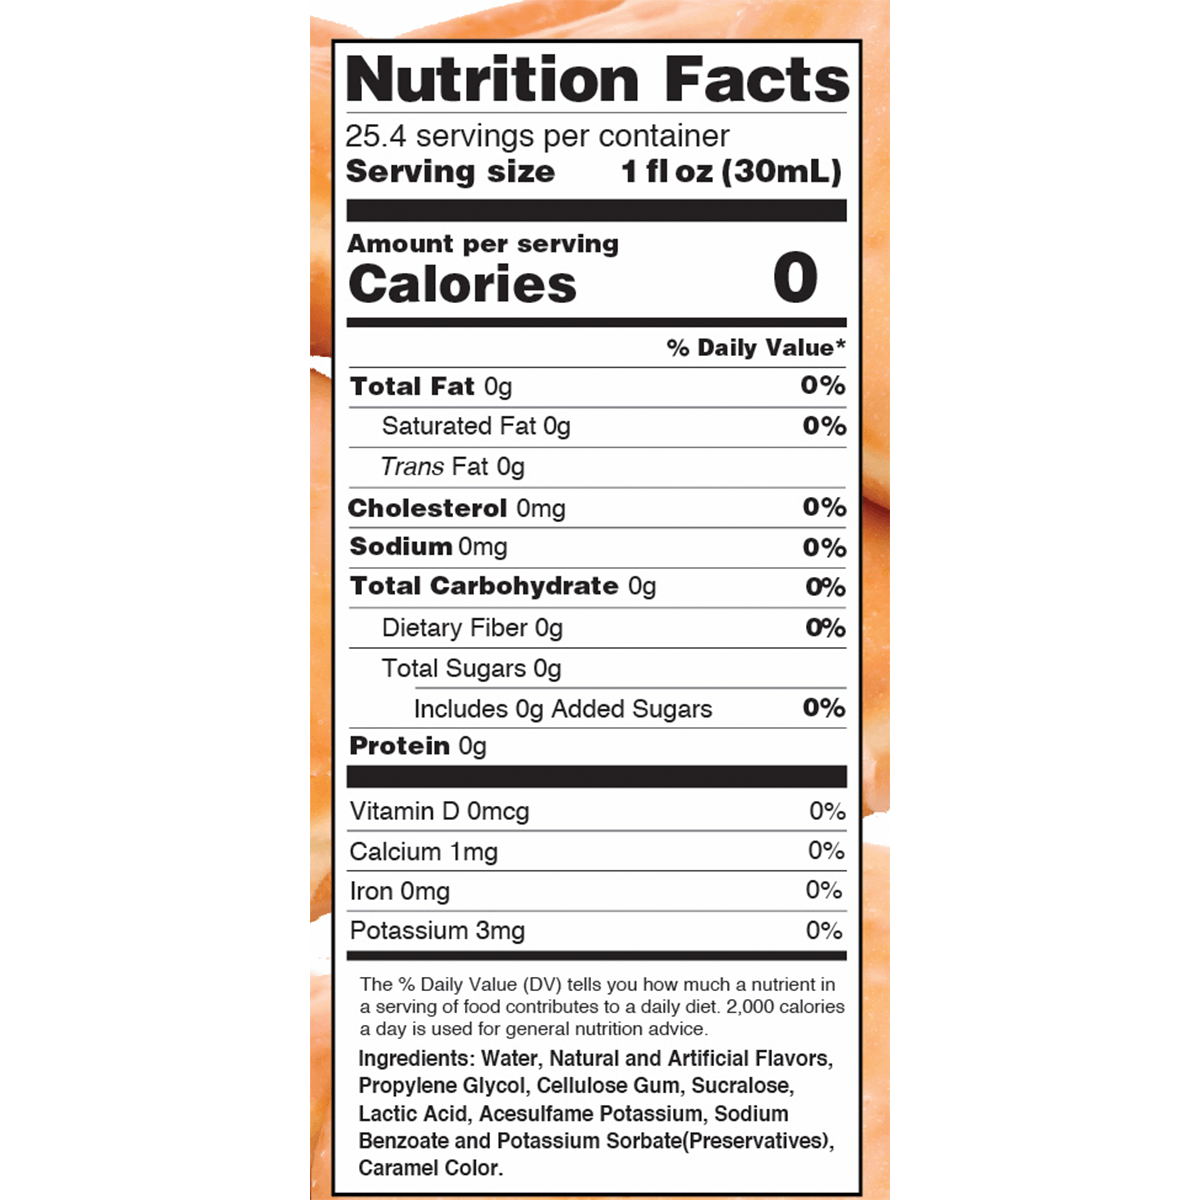 kwik trip glazed donut nutrition facts